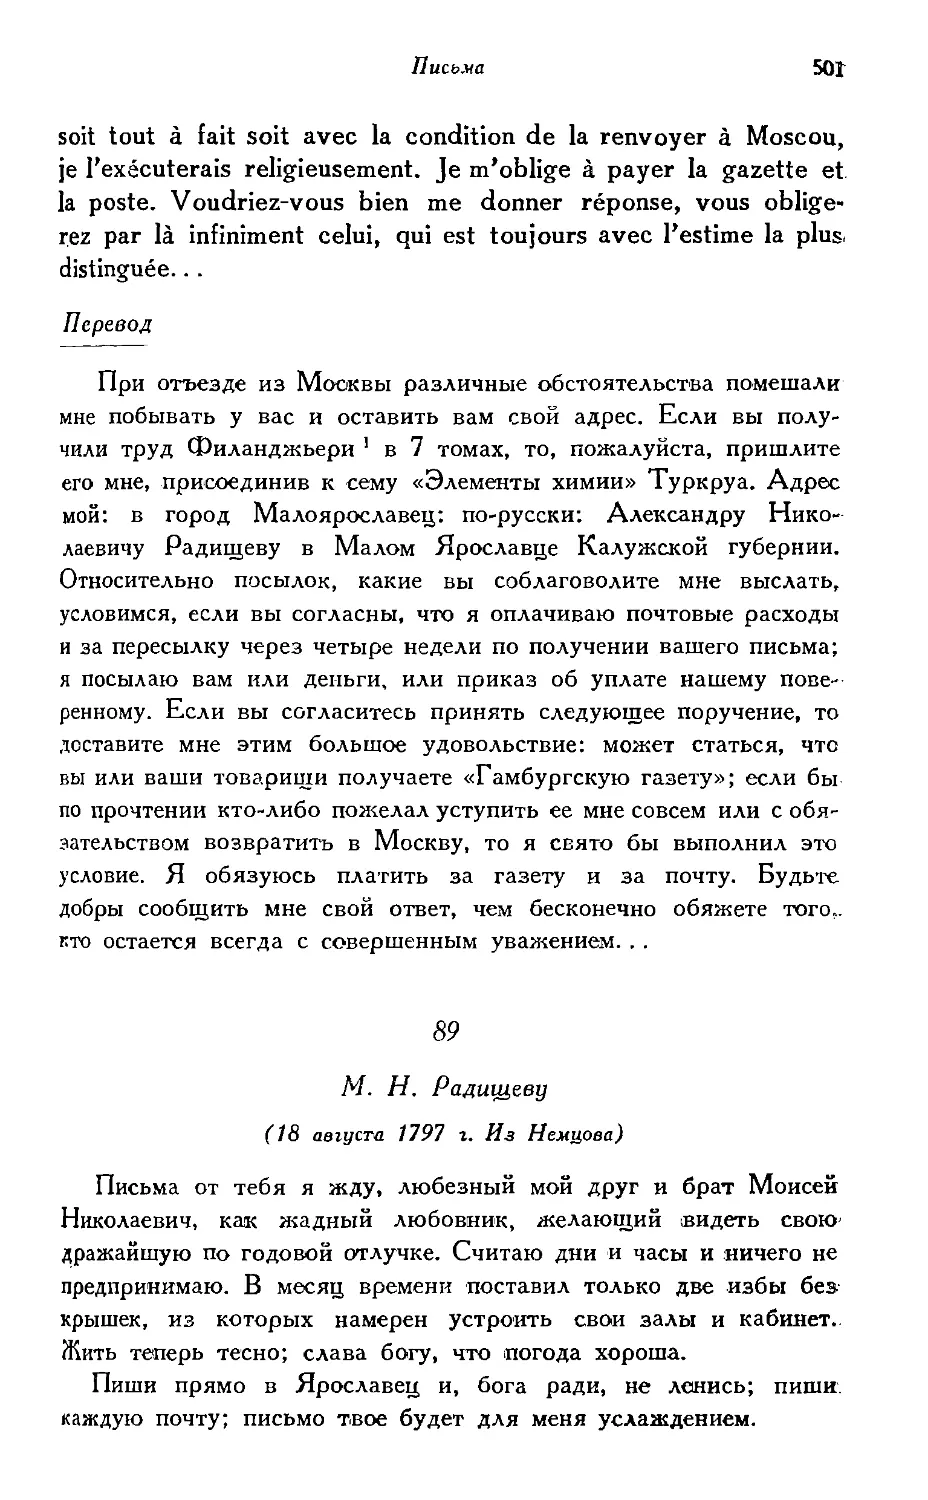 89. М. Н. Радищеву (18 августа 1797 г.)